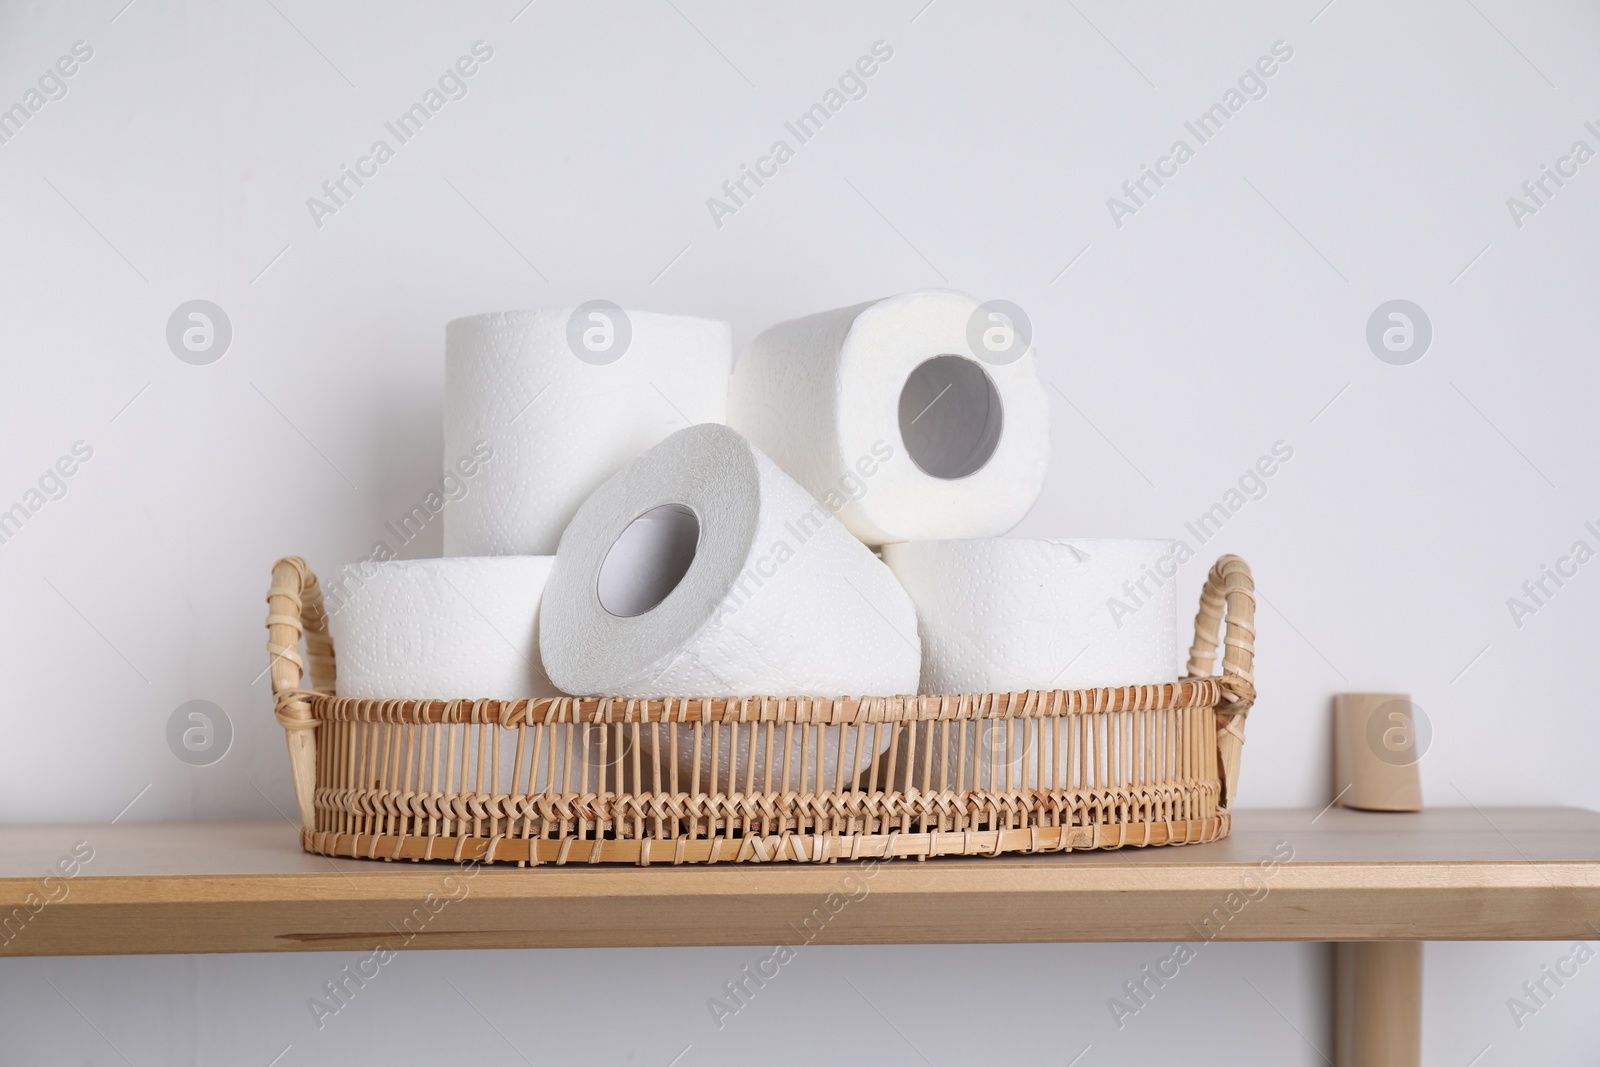 Photo of Toilet paper rolls in wicker basket on wooden table near white wall